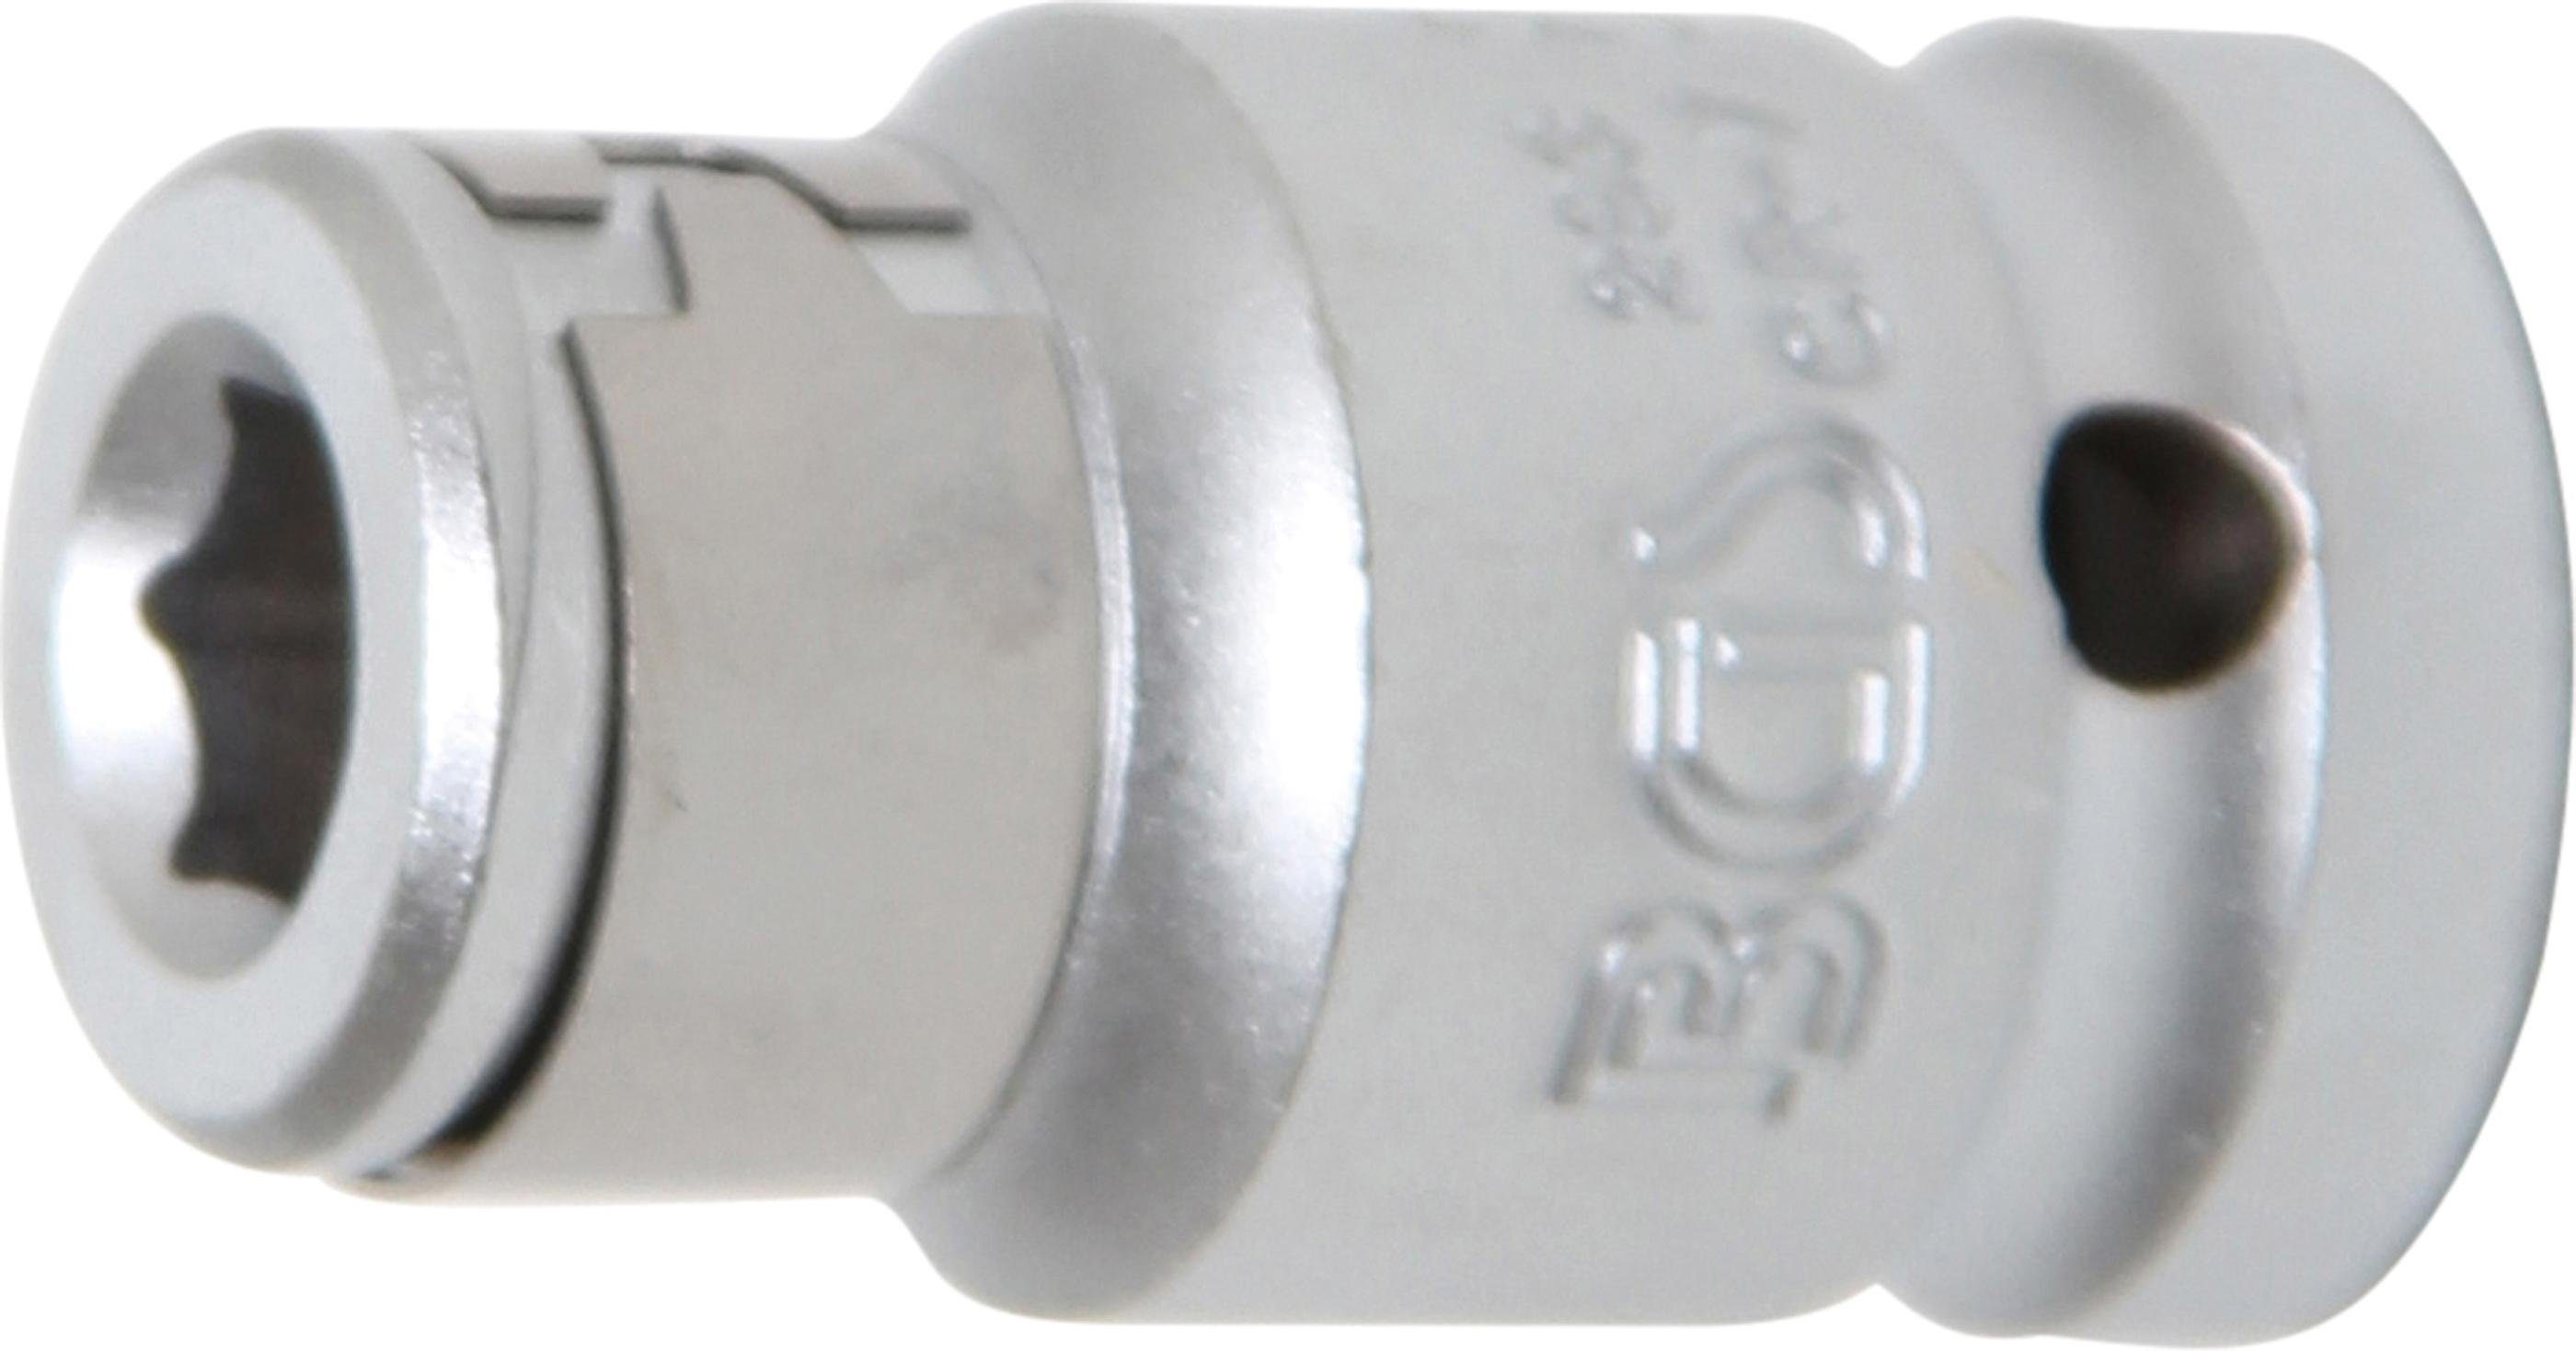 BGS technic Bit-Schraubendreher Bit-Adapter mit Haltekugel, Innenvierkant 12,5 mm (1/2), Innensechskant 8 mm (5/16)